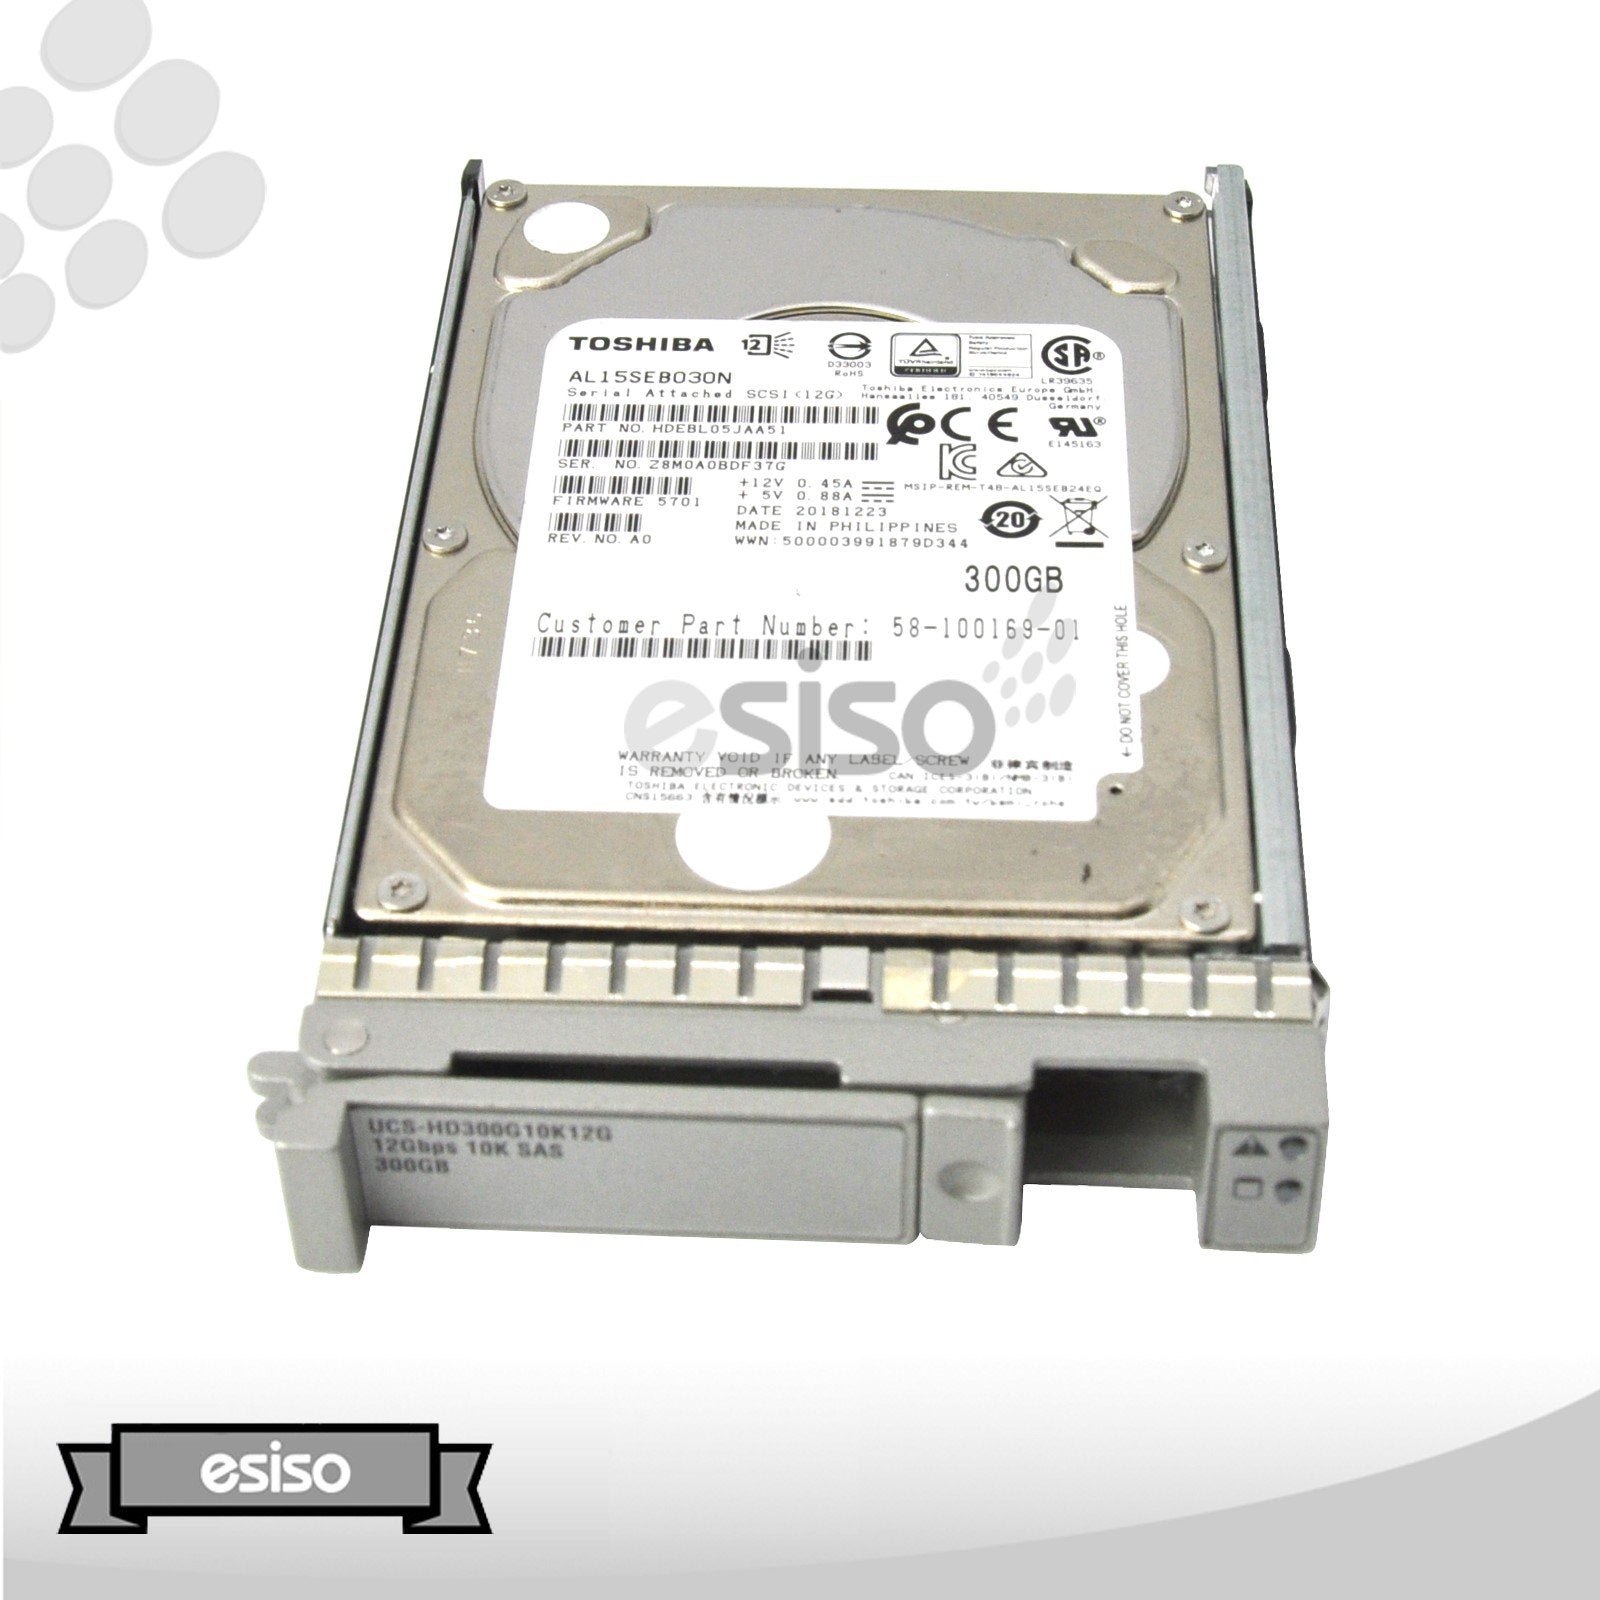 UCS-HD300G10K12G AL15SEB030N CISCO 300GB 10K 12G SFF 2.5" SAS HARD DRIVE